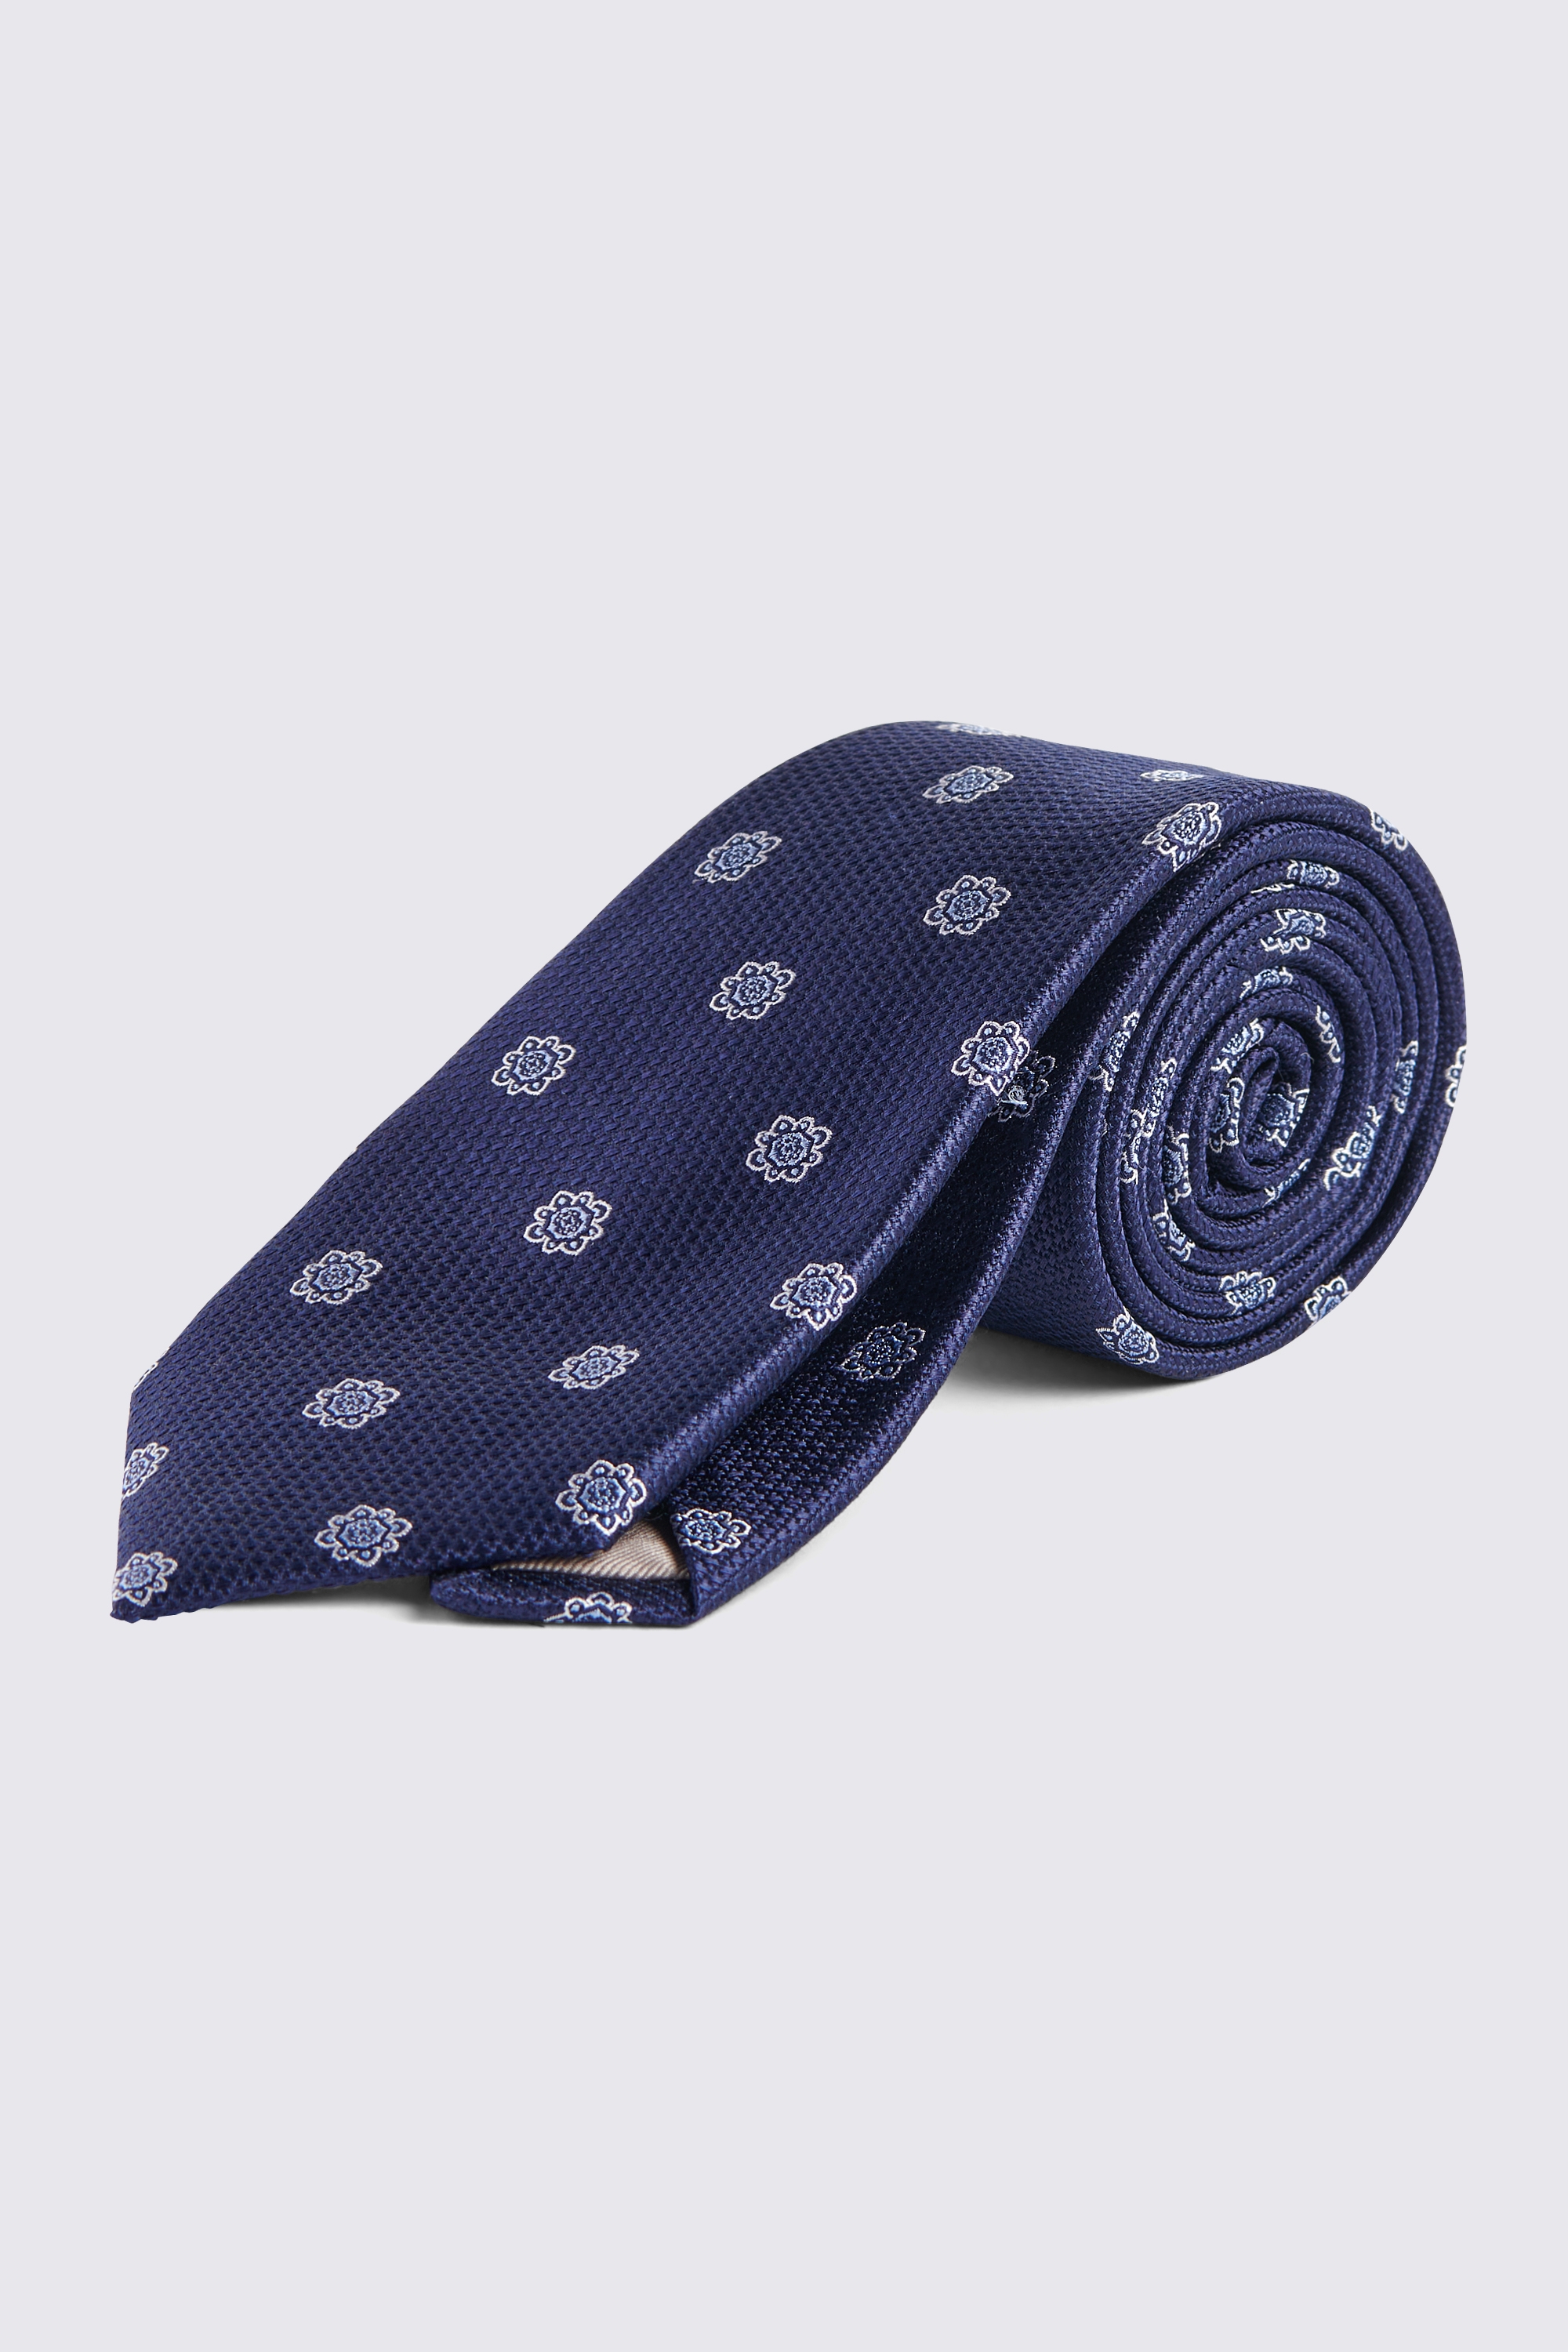 Navy Textured Silk Medallion Tie | Buy Online at Moss